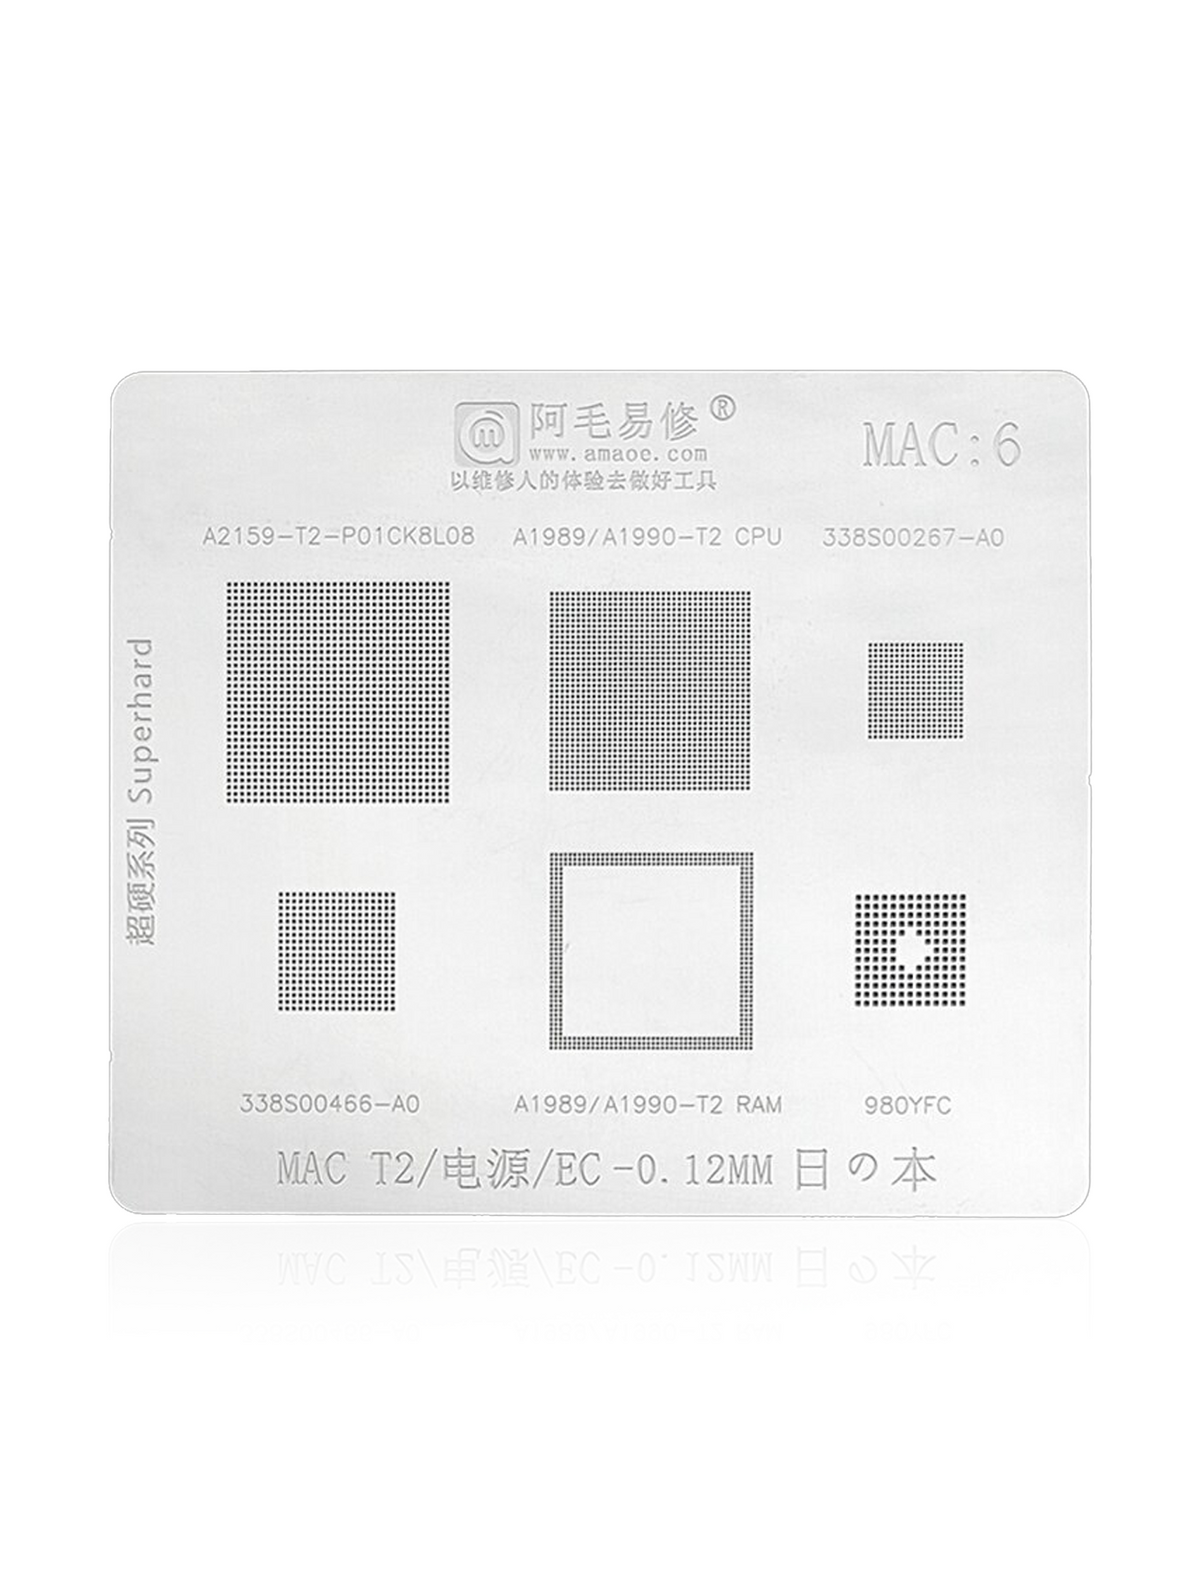 POWER LOGIC STENCIL COMPATIBLE WITH MACBOOK A1989 / A1990 / A2159-T2  (MAC 6)